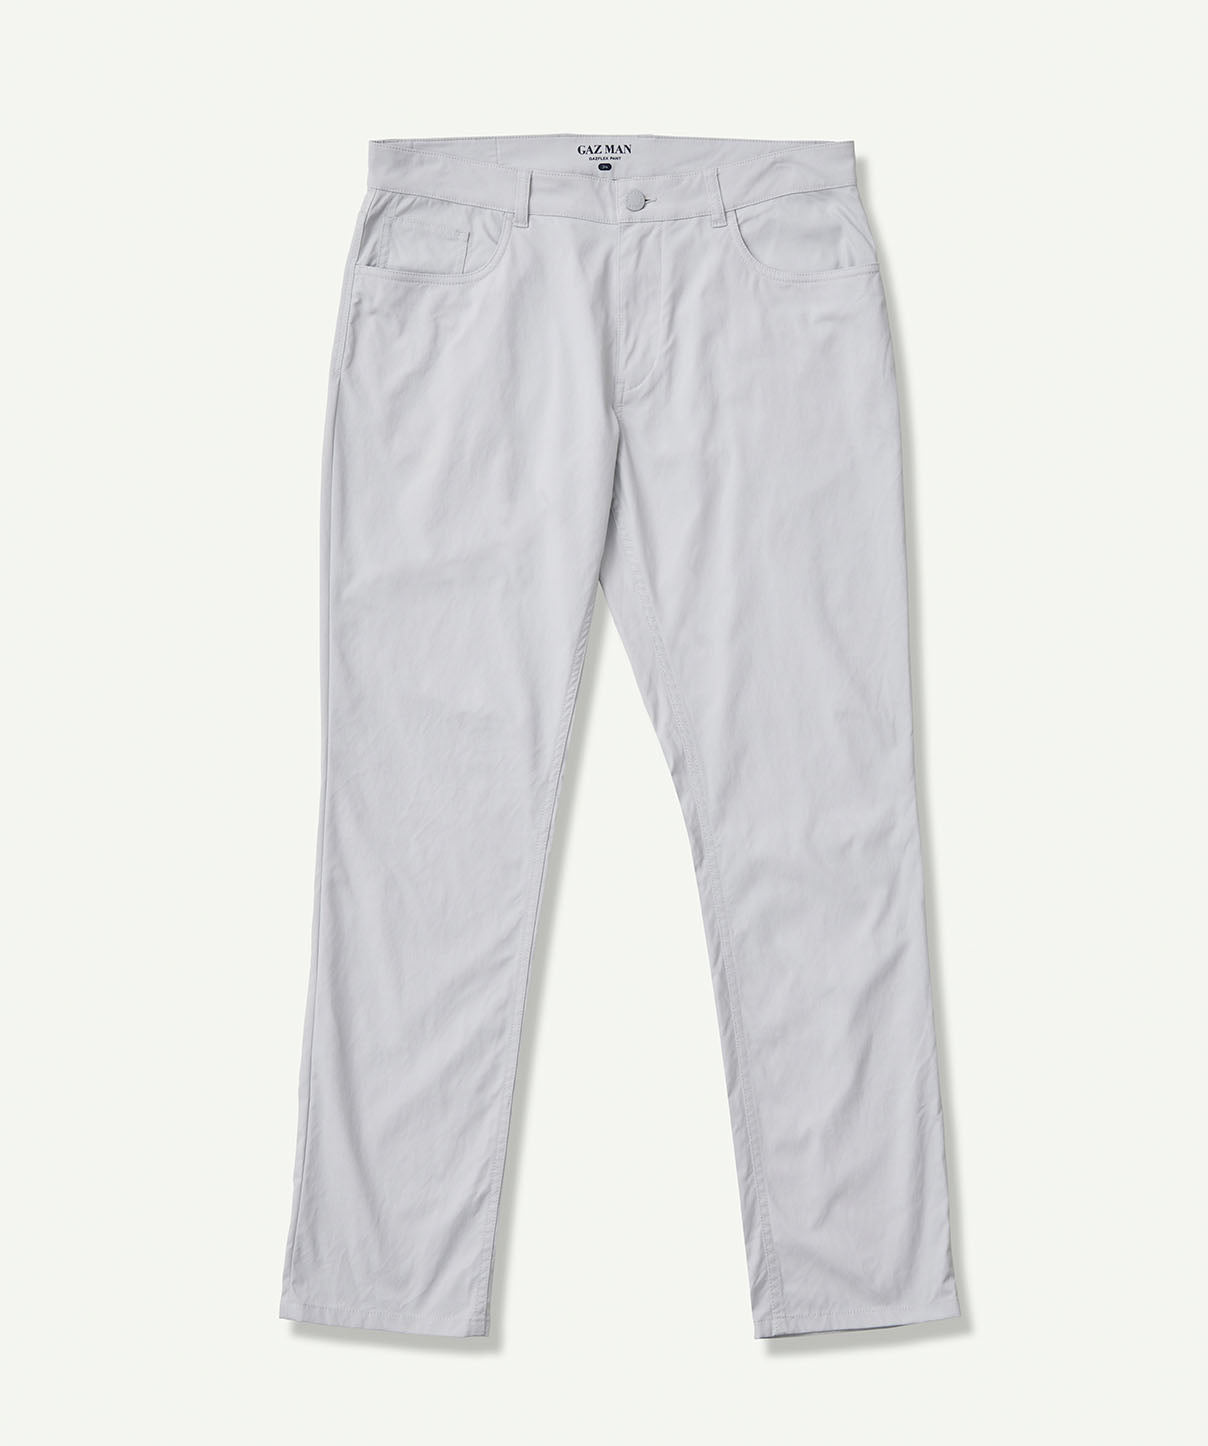 GAZFLEX Performance Pant - Light Grey - Casual Pants - GAZMAN